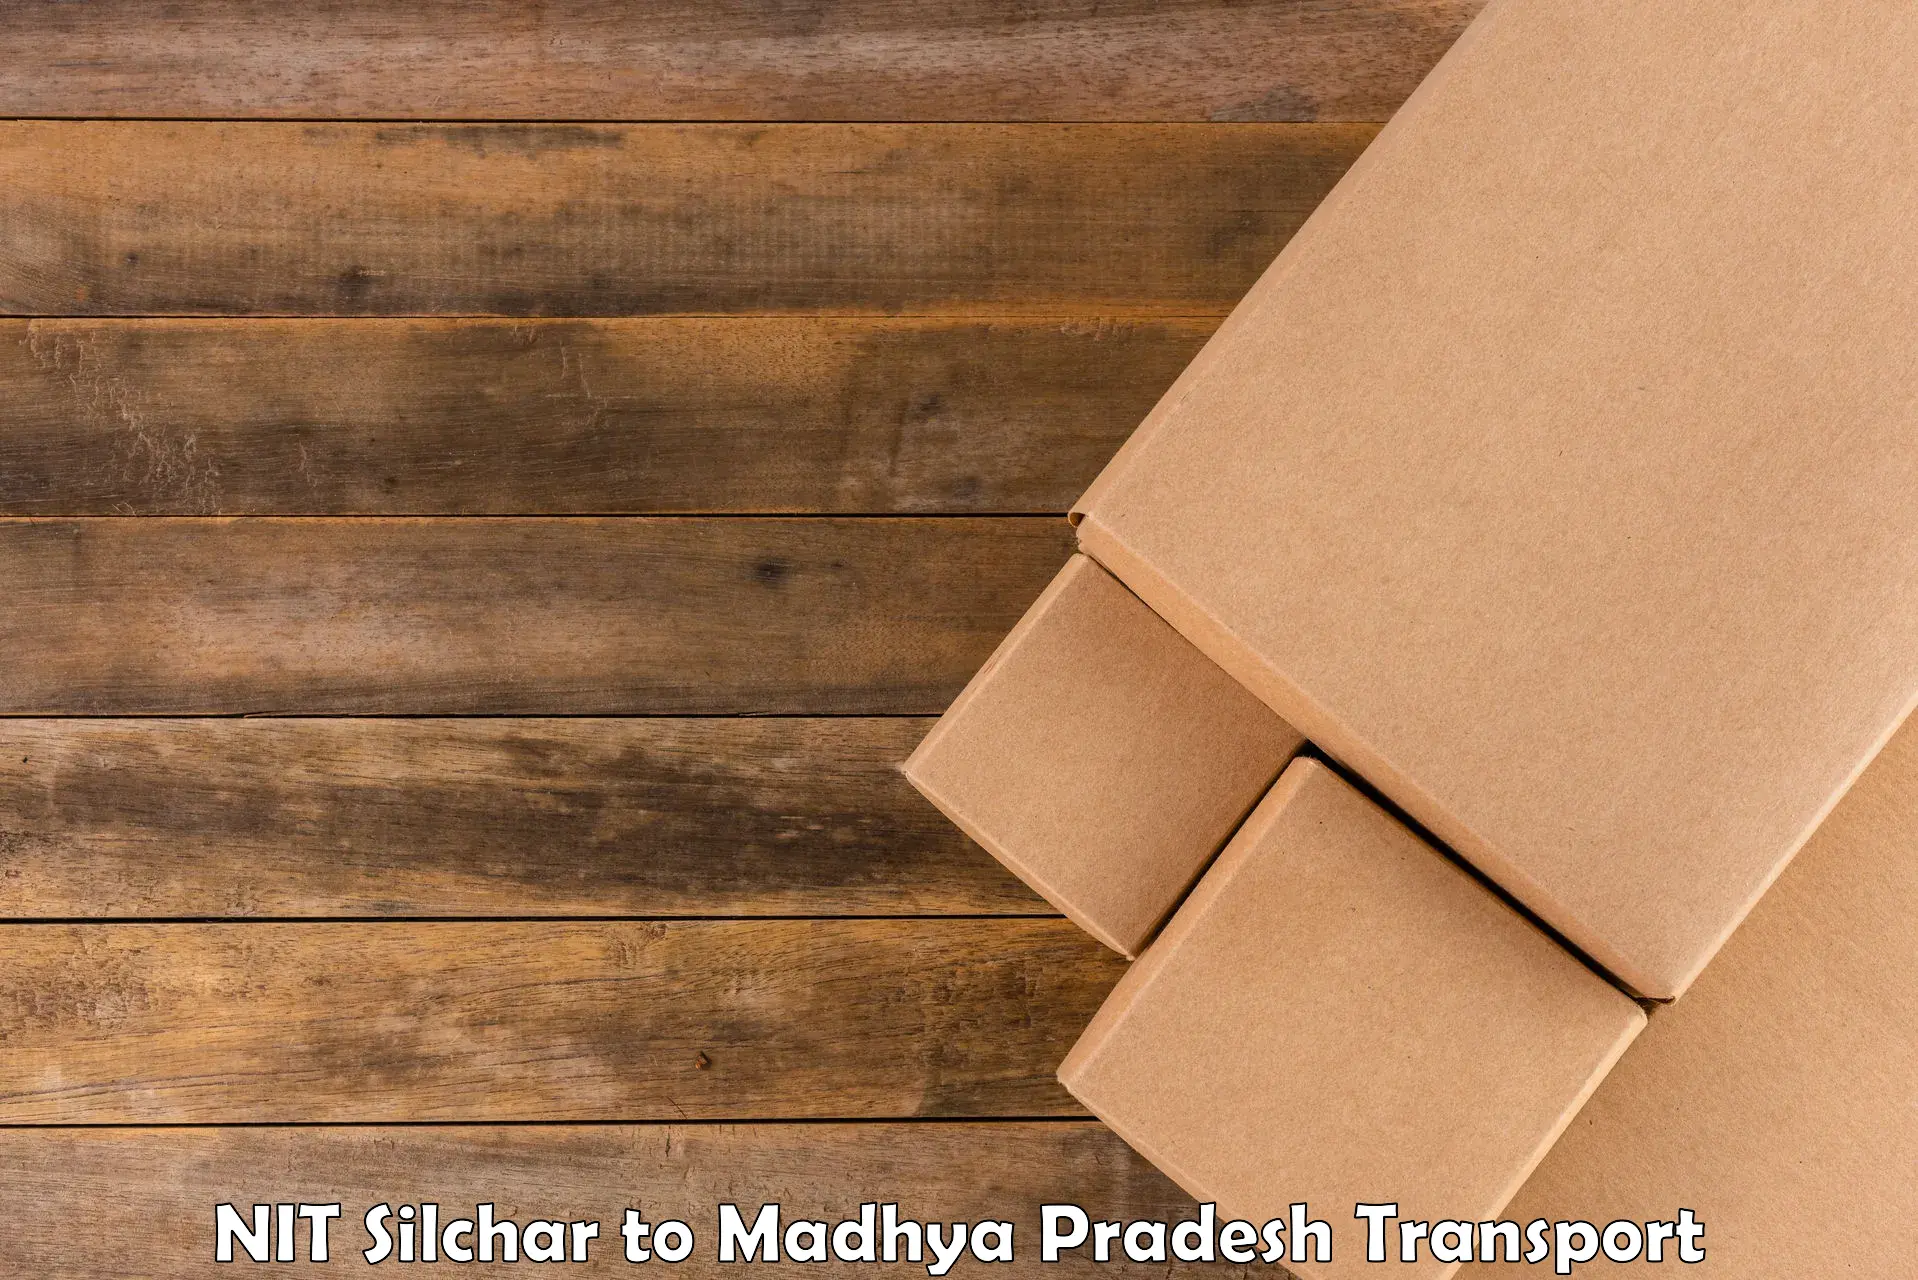 Container transport service NIT Silchar to Vidisha